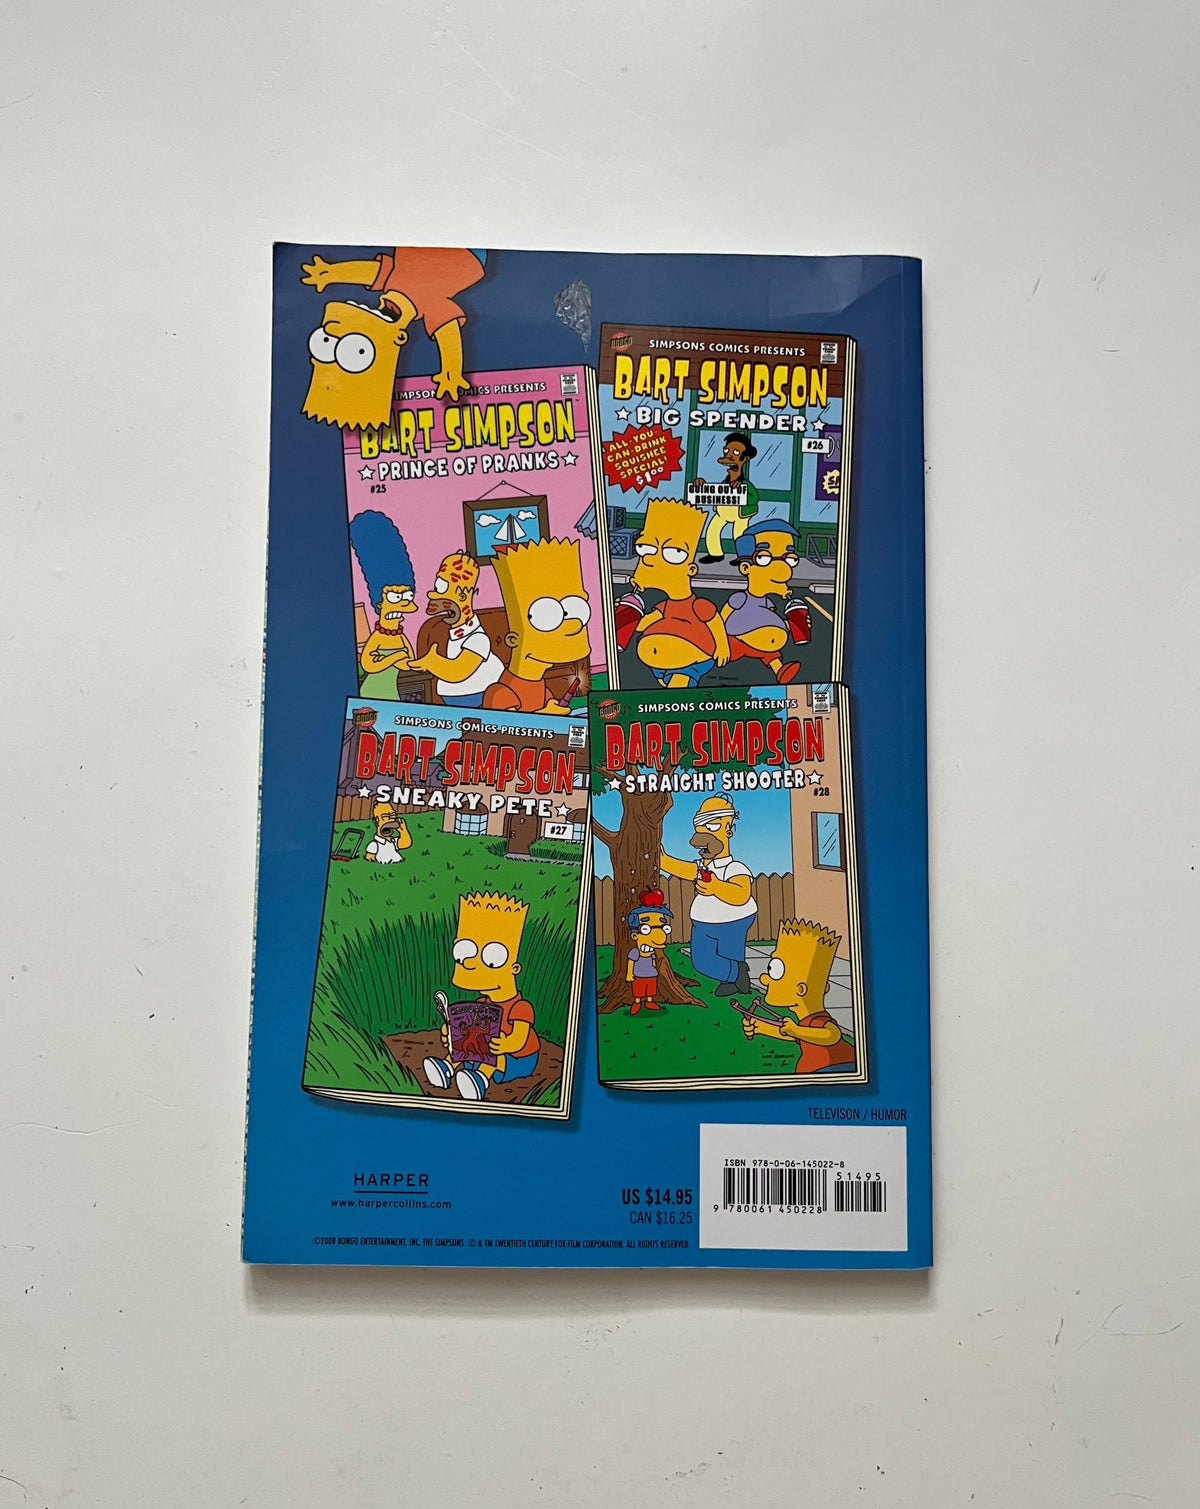 The Brilliant Book of Bart Simpson by Matt Groening